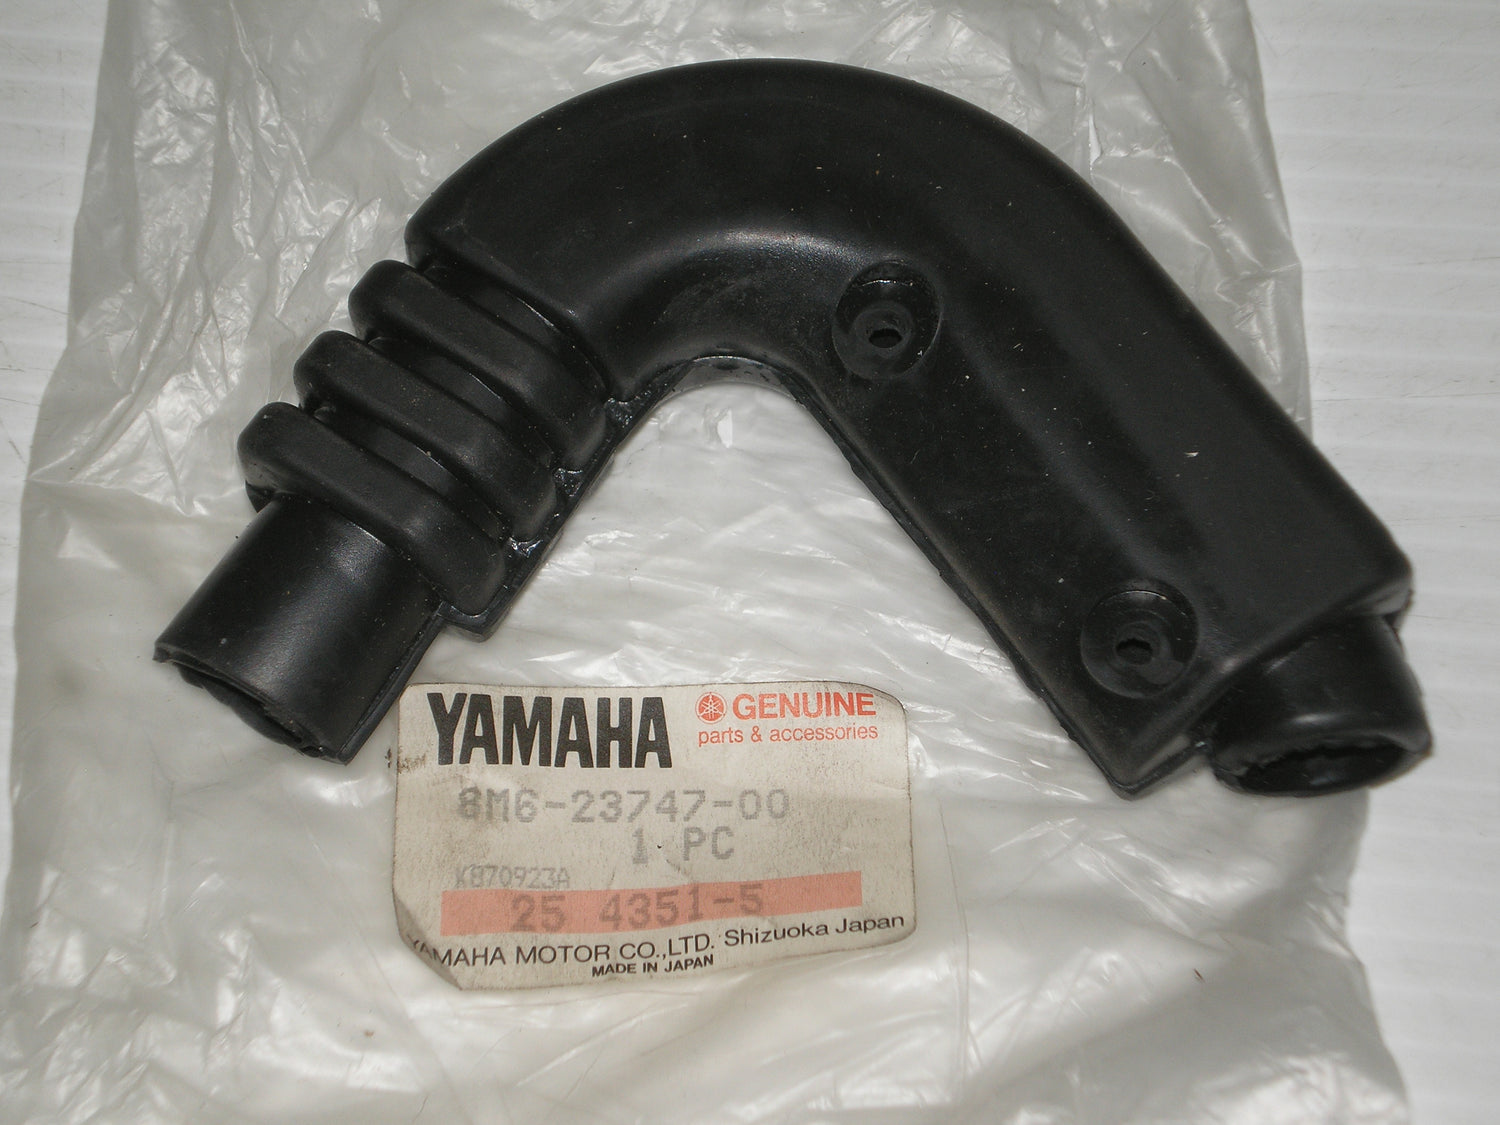 Yamaha Snowmobile Miscellaneous Parts